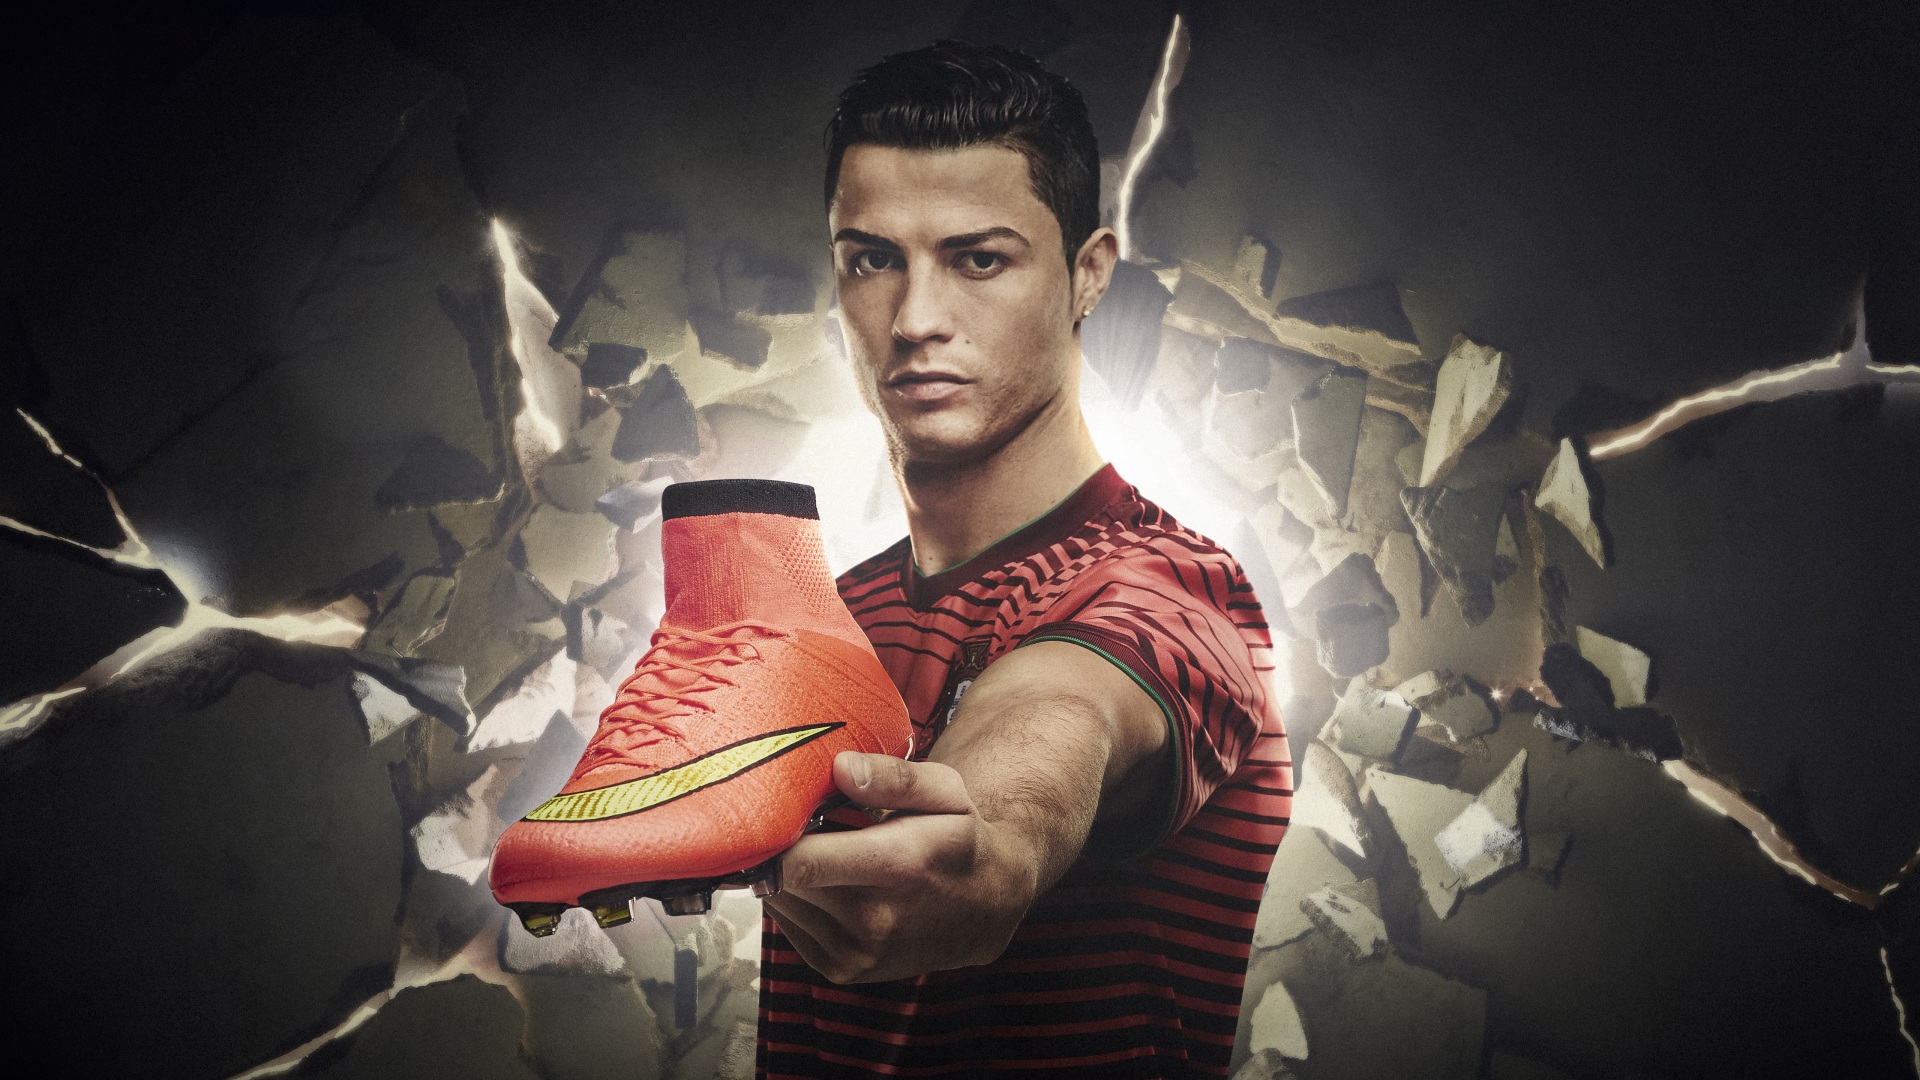 Wallpaper 4k Cristiano Ronaldo Nike Mercurial Football Boots Wallpaper